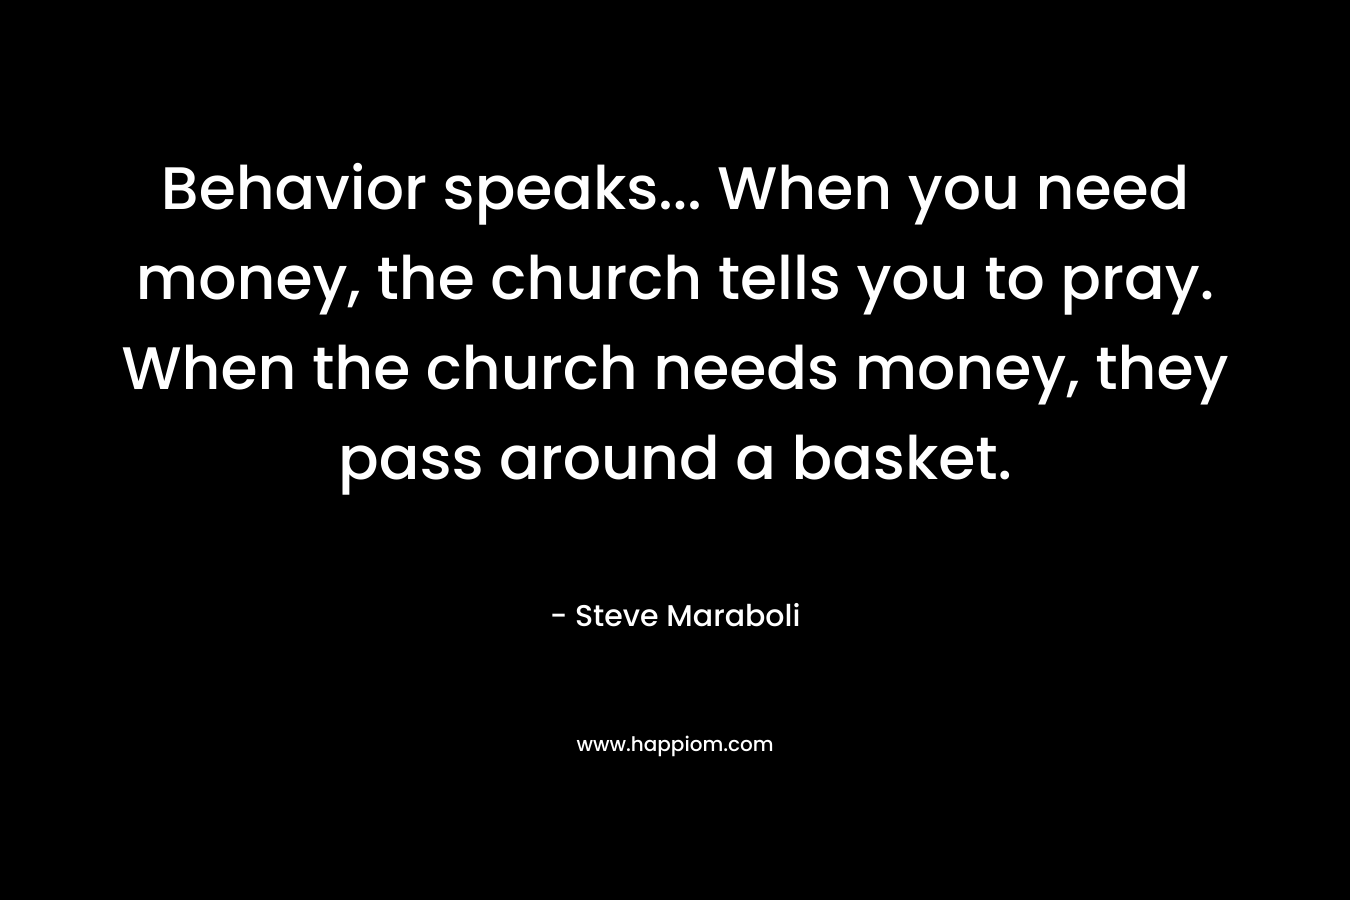 Behavior speaks... When you need money, the church tells you to pray. When the church needs money, they pass around a basket.